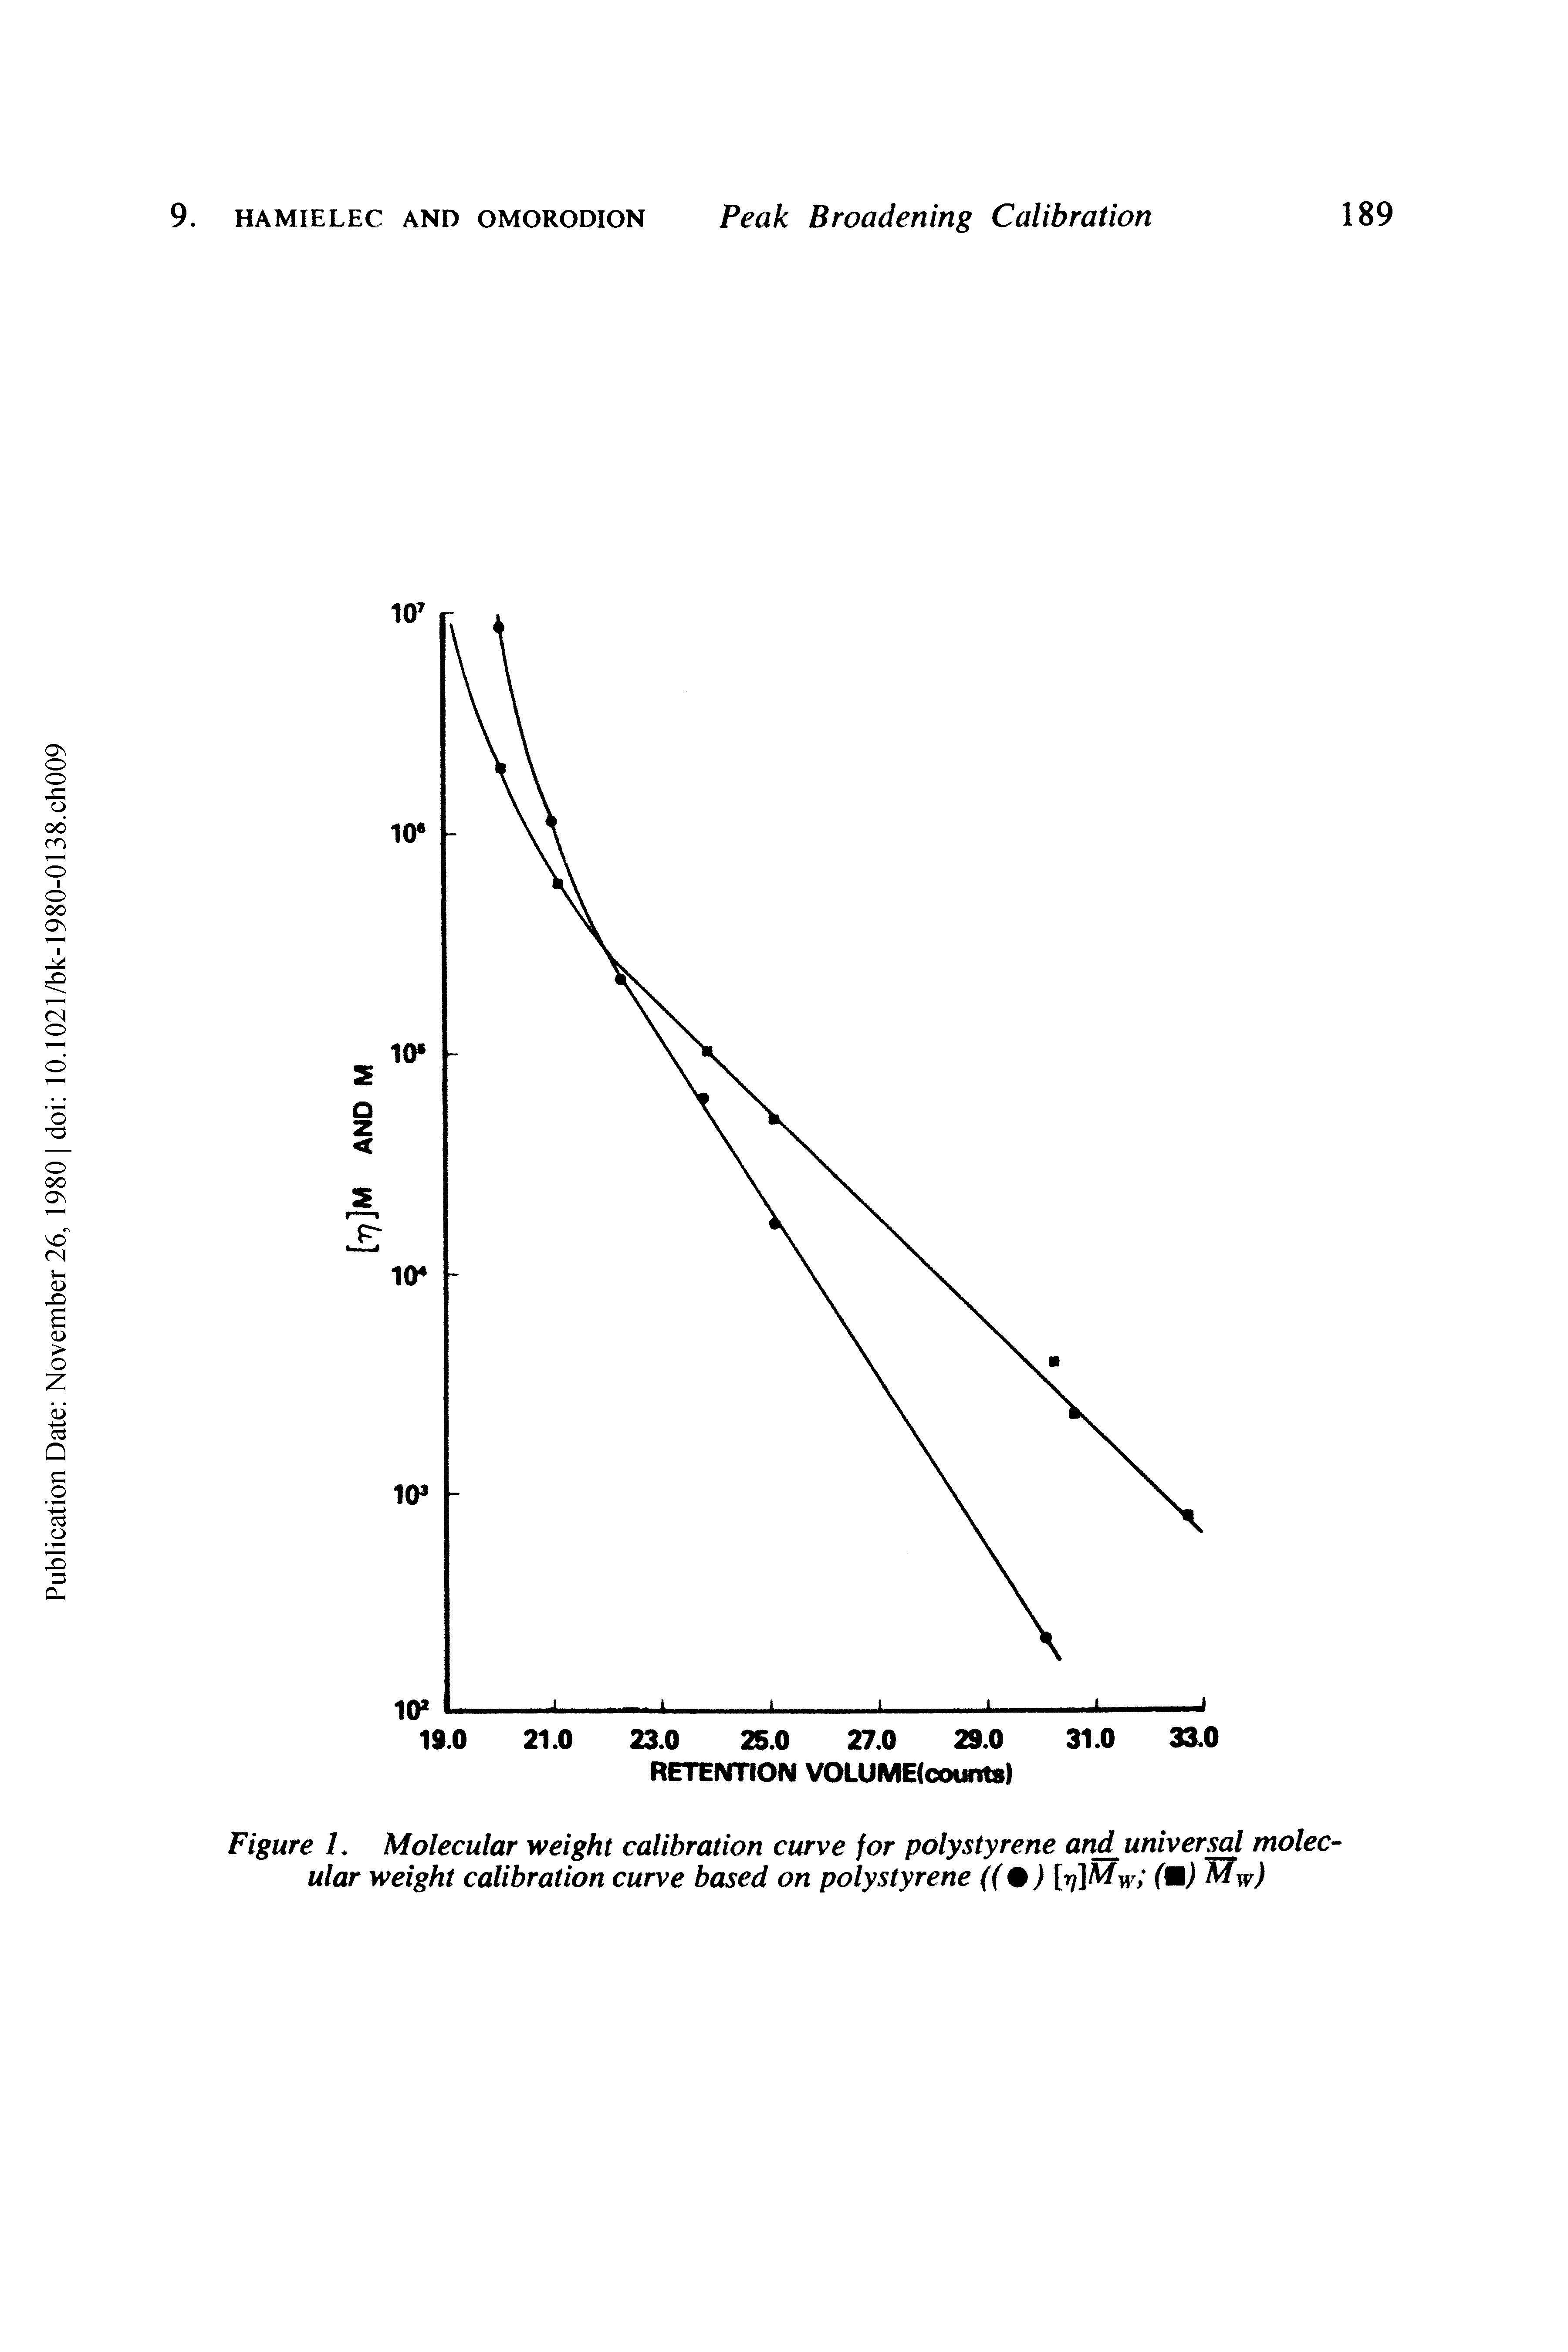 Figure L Molecular weight calibration curve for polystyrene an universal molecular weight calibration curve based on polystyrene ((%) [rj]Mw (U) w)...